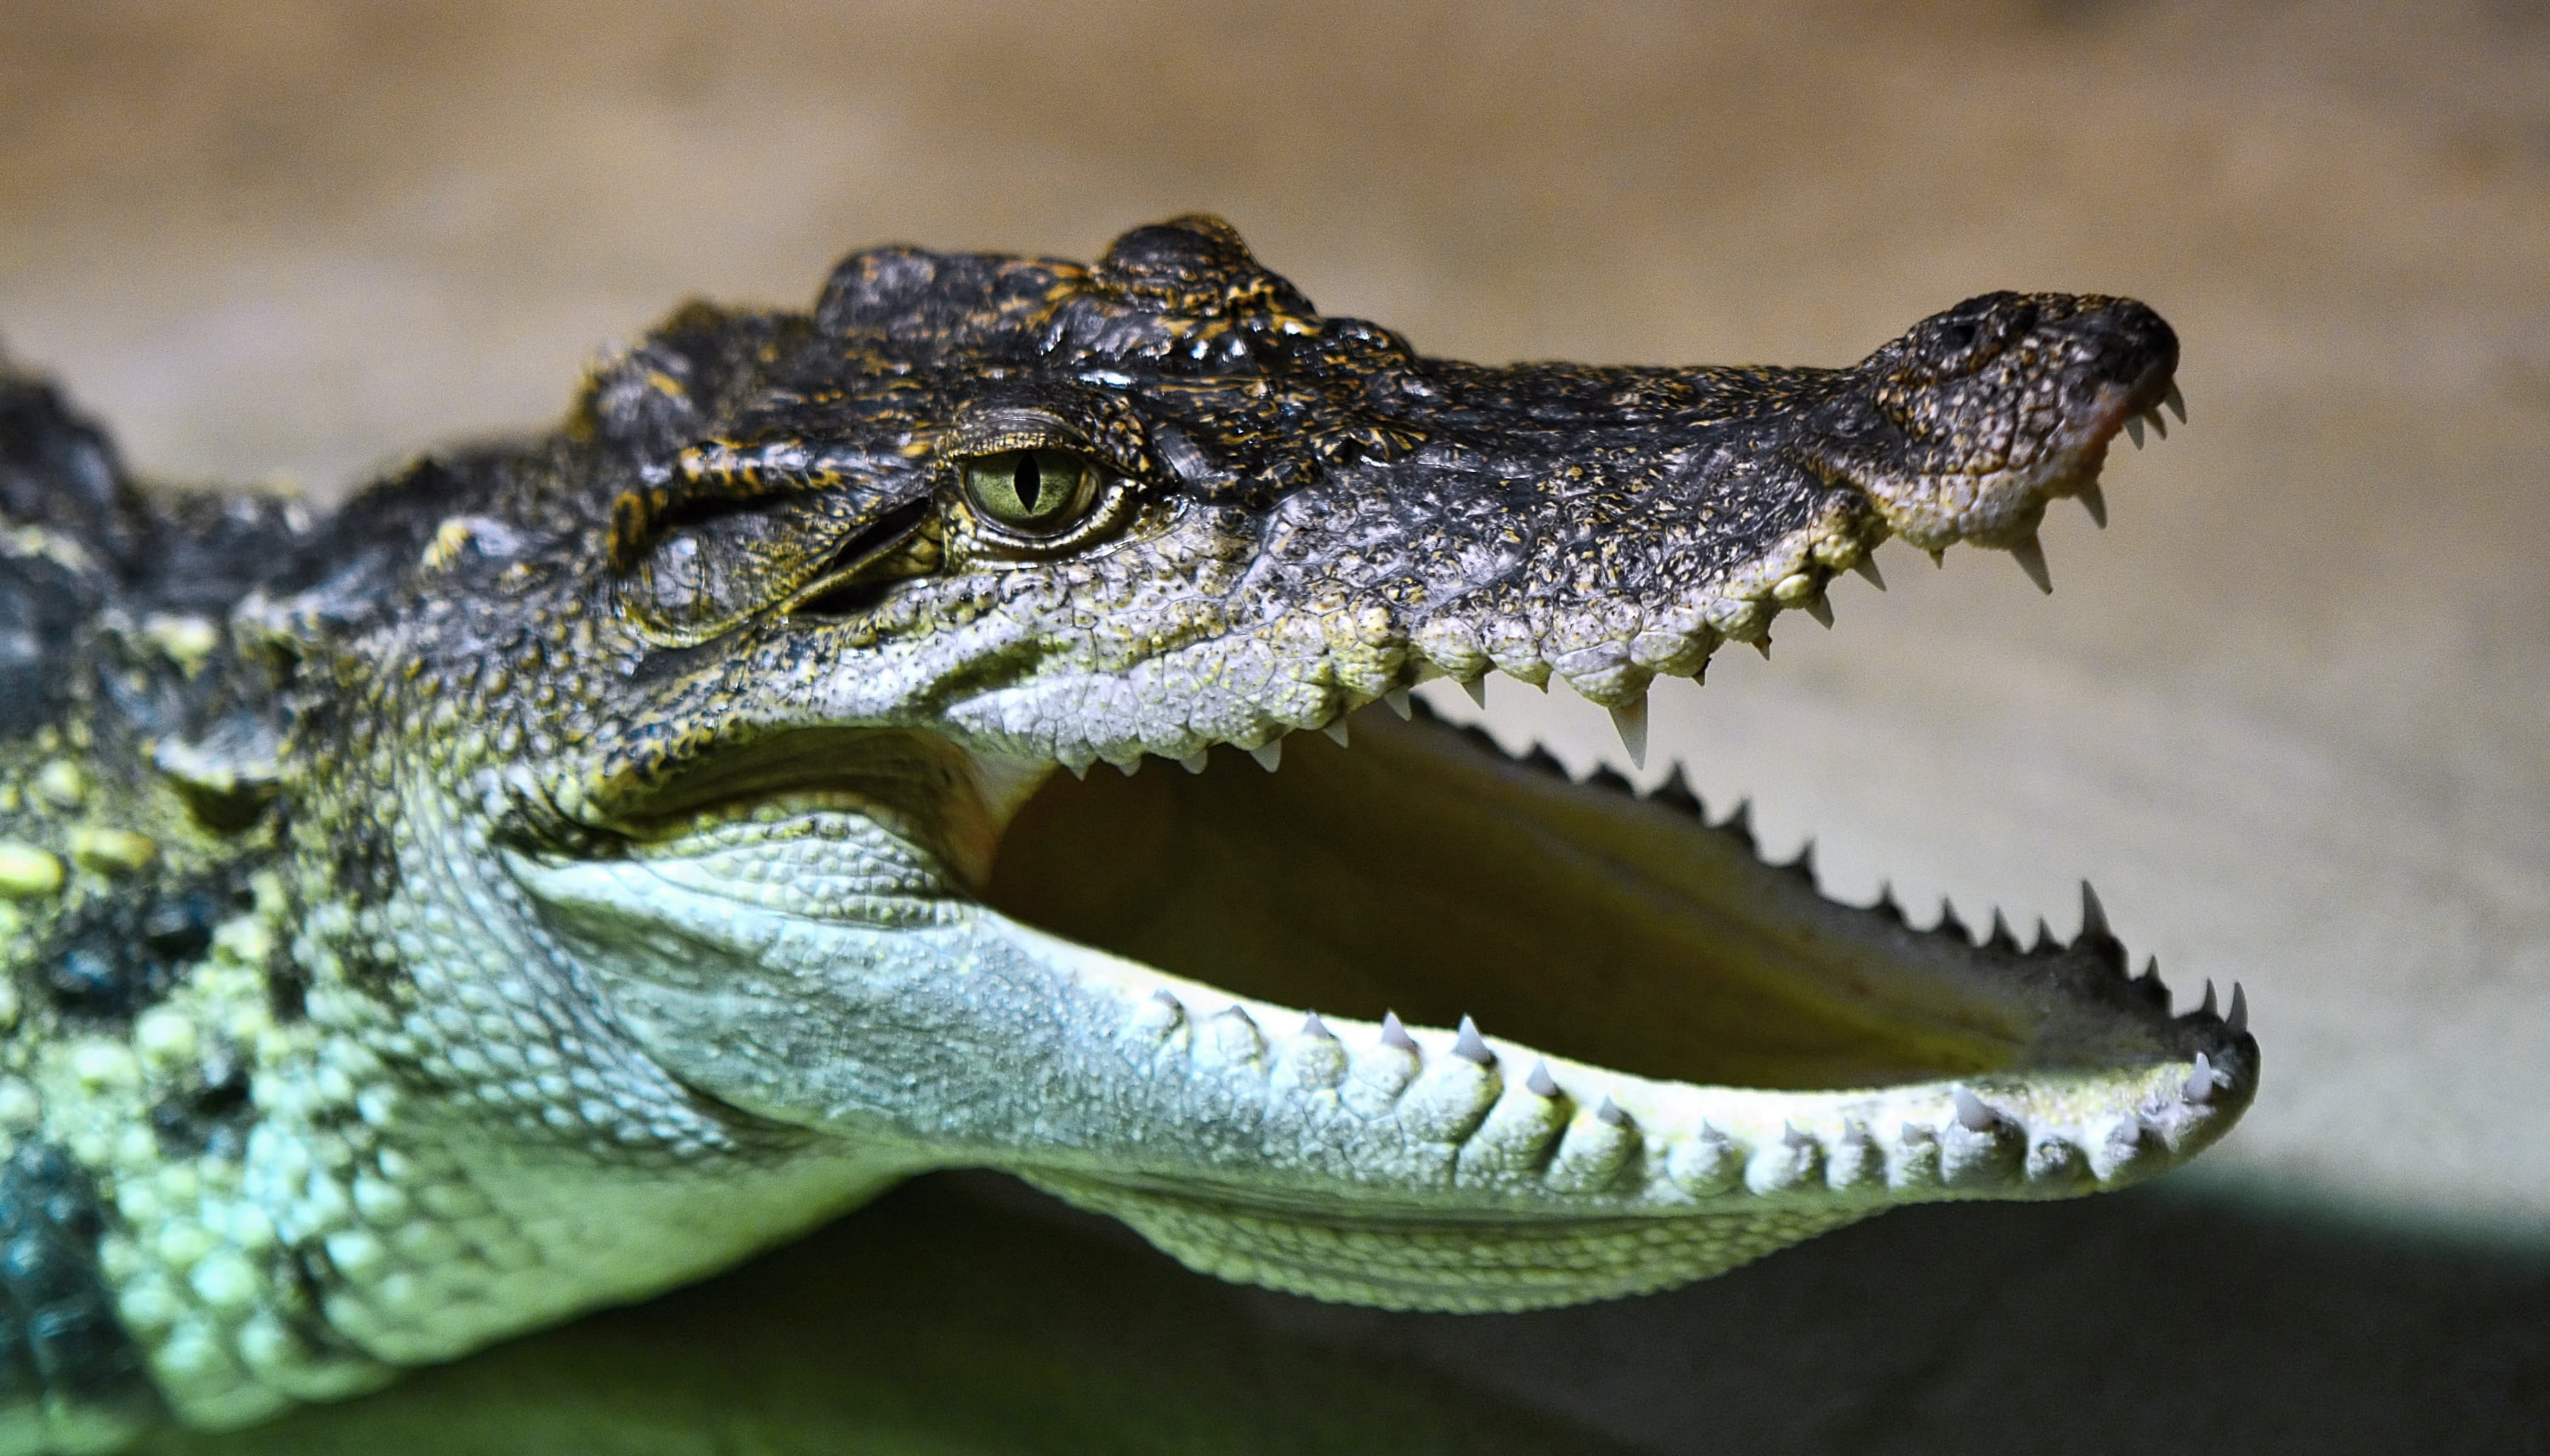 opened mouth of alligator, crocodile, head, animal, reptile, skin